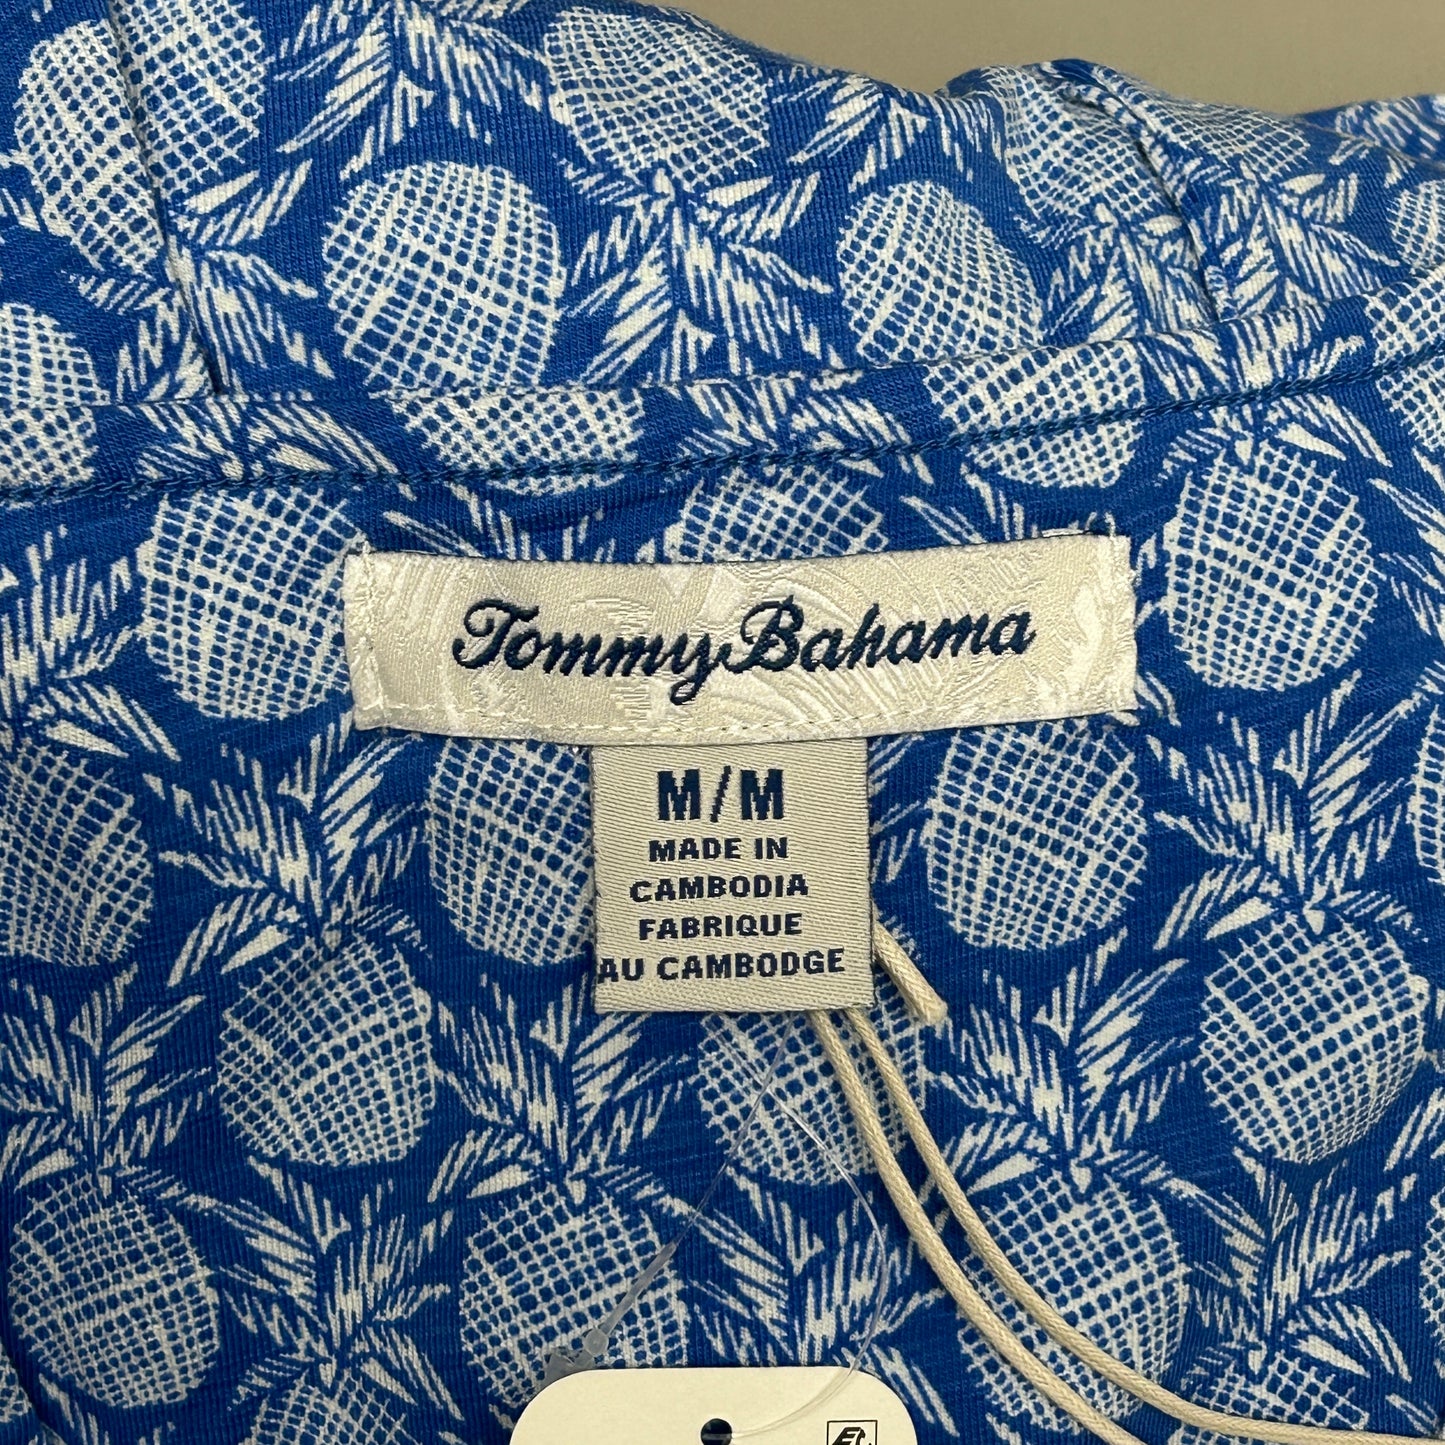 TOMMY BAHAMA Women's Fineapple Sleeveless SunDress Blue/White Turkish Sea Size M (New)